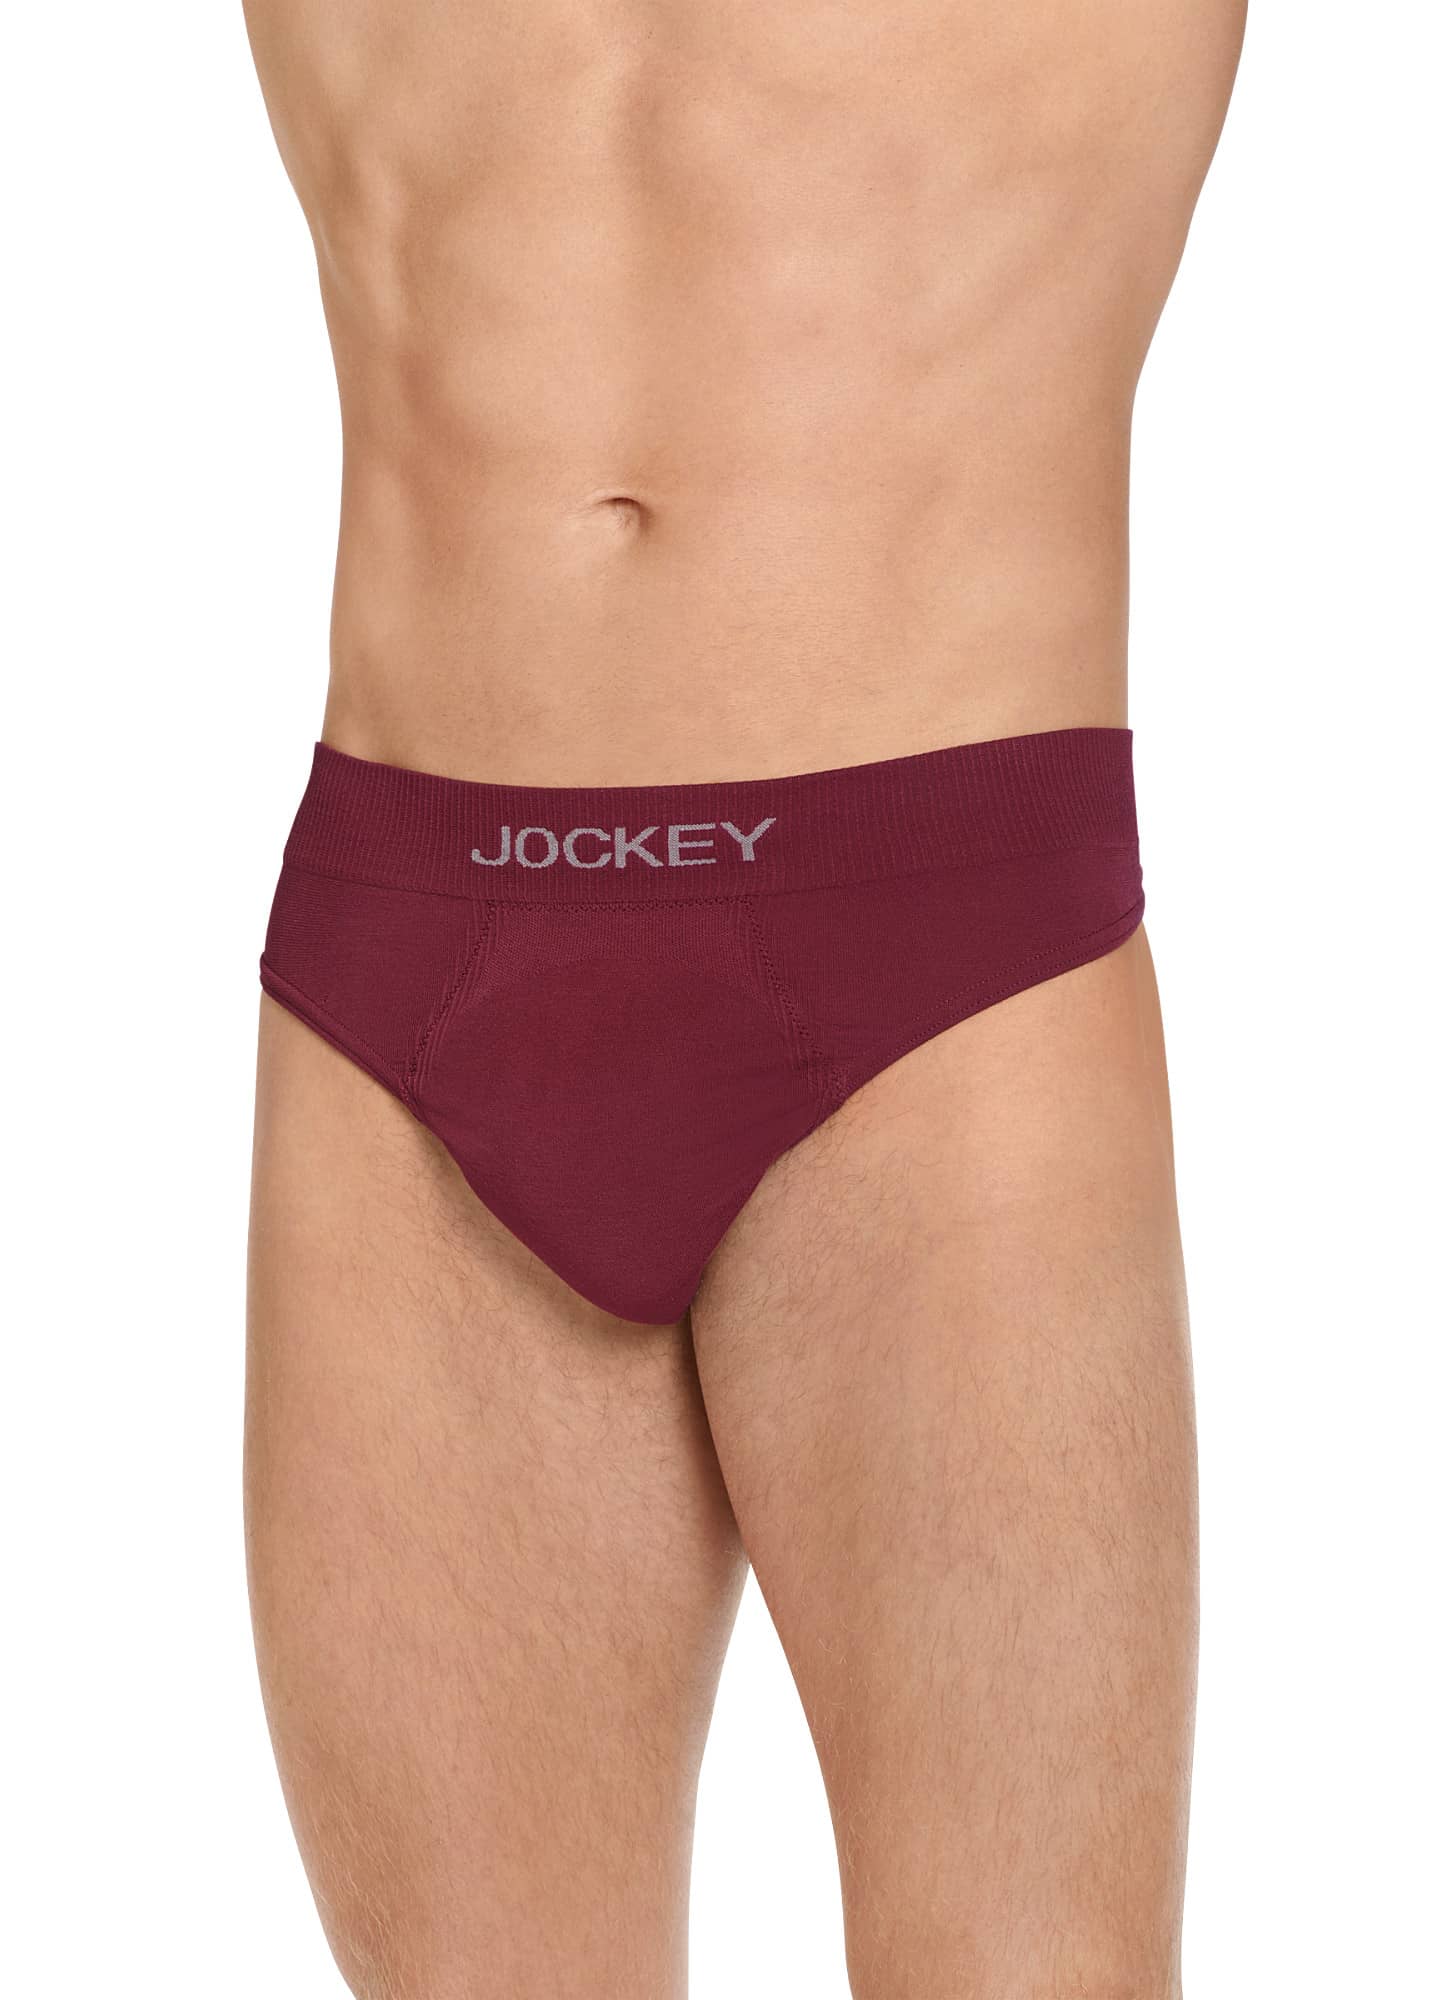 Jockey mens Preto formfit modal seamfree thong underwear tamanho S M